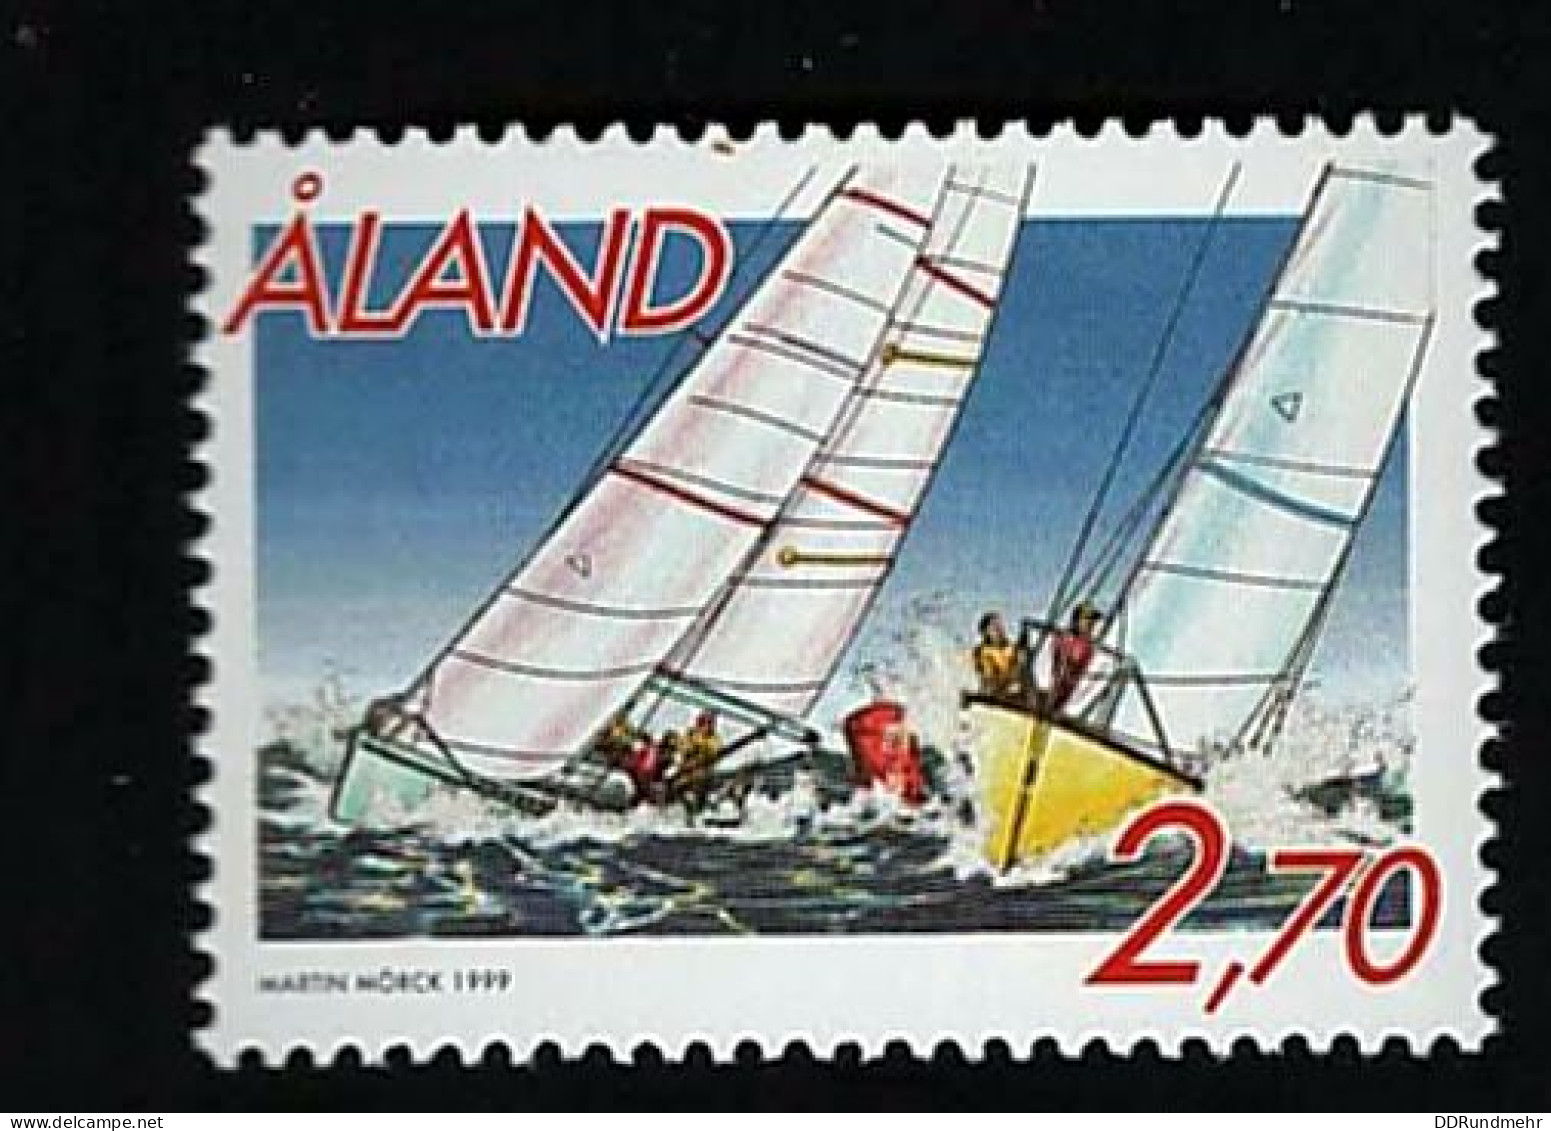 1999 Sailsport Michel AX 158 Stamp Number AX 158 Yvert Et Tellier AX 158 Stanley Gibbons AX 154 AFA AX 158 Xx MNH - Aland